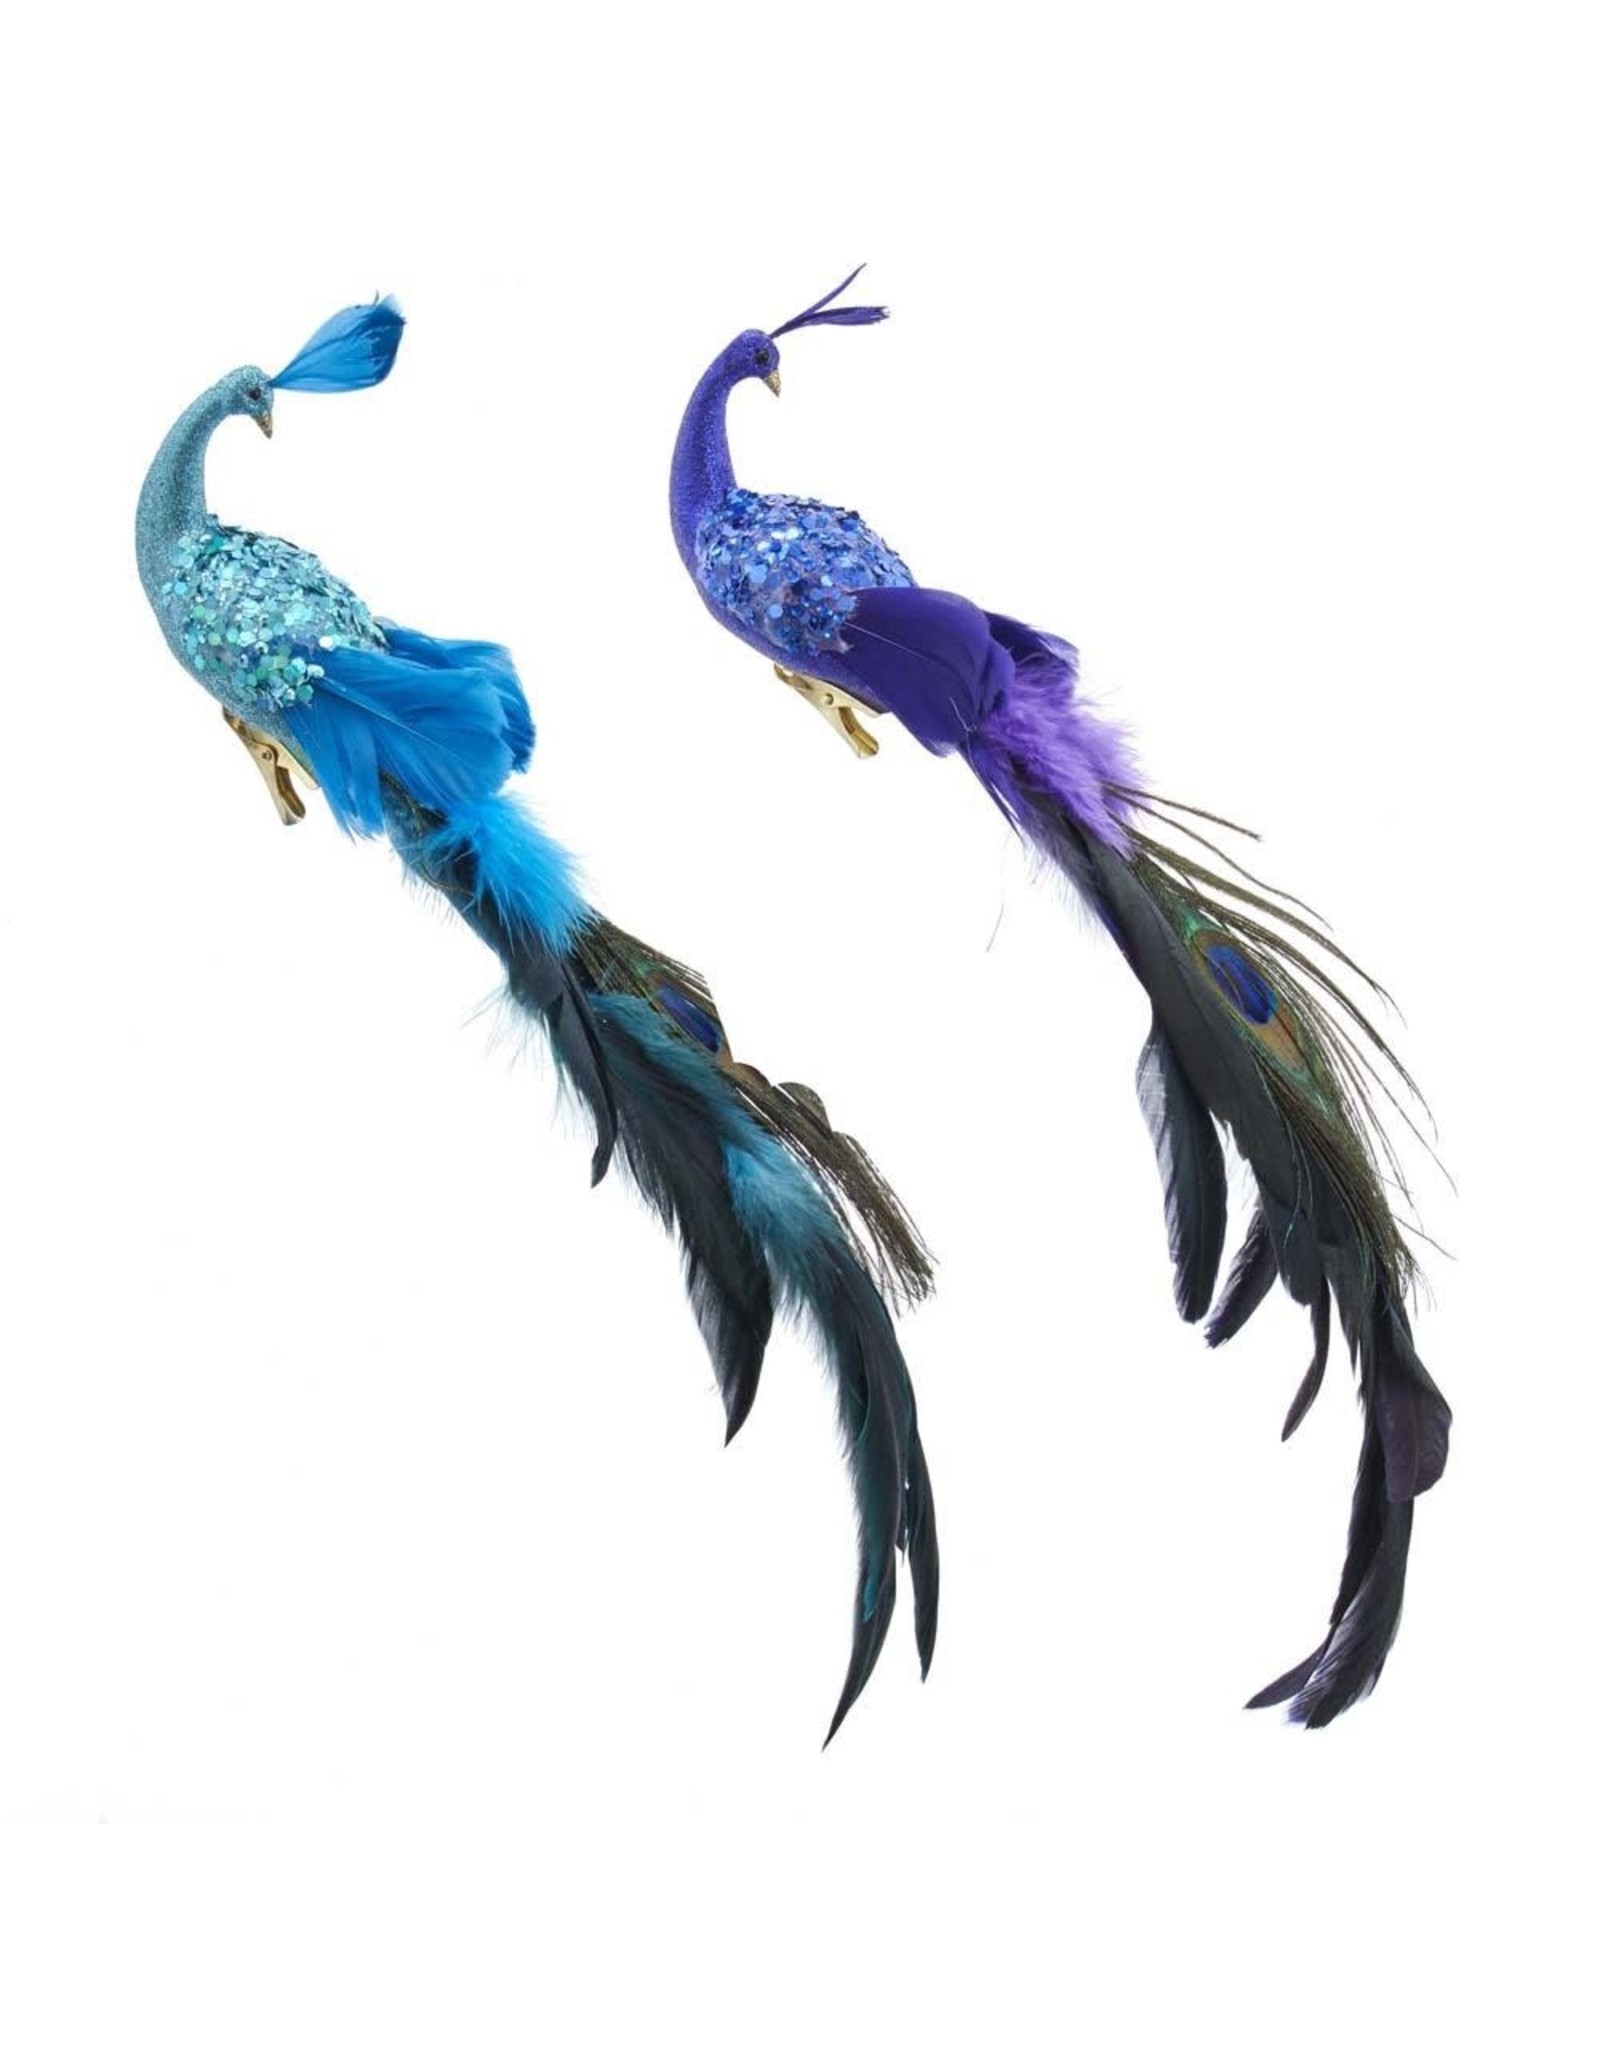 Kurt Adler Feather Peacock With Clip Bird Ornaments 2 Assorted